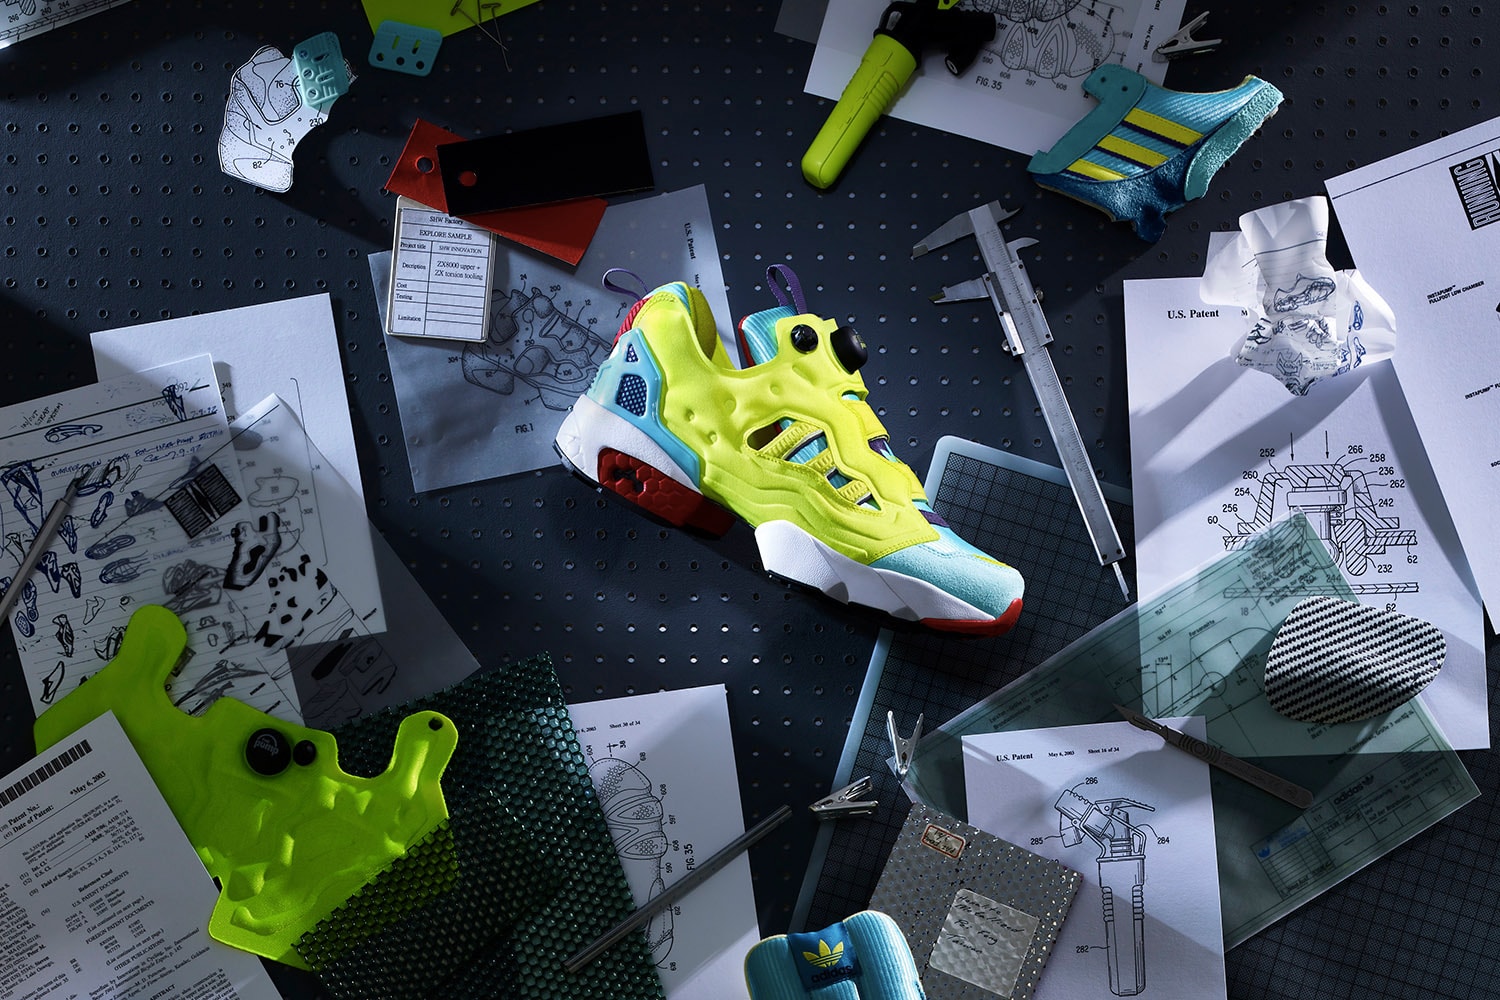 adidas Originals x Reebok ZX Fury 最新聯名鞋款正式登場